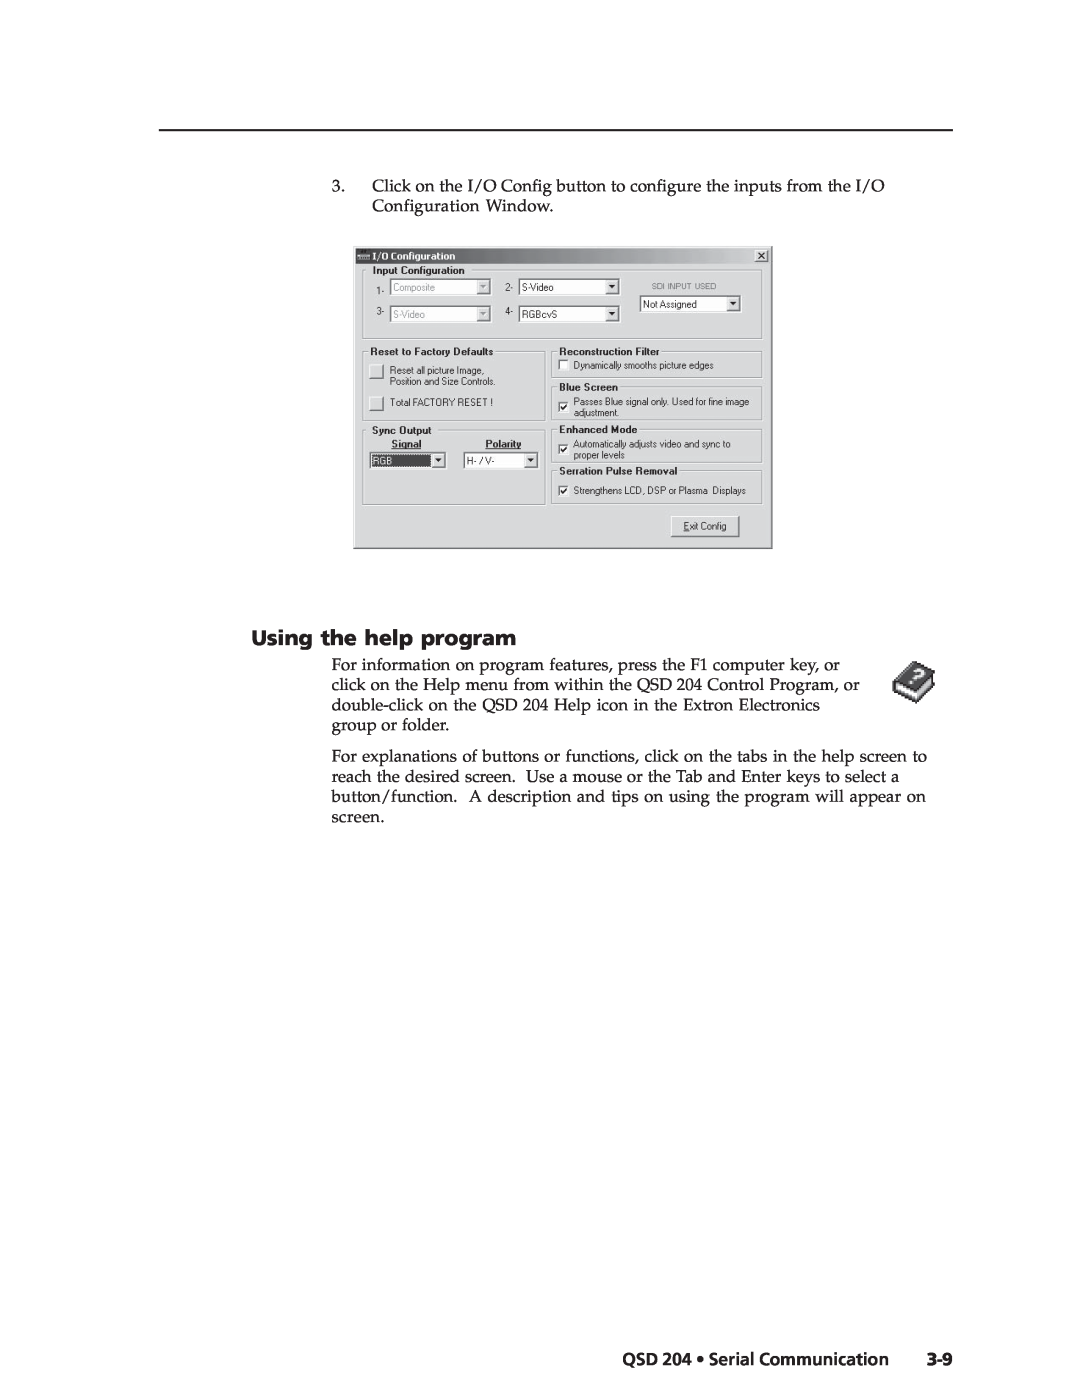 Extron electronic QSD 204 D manual Using the help program, QSD 204 Serial Communication 